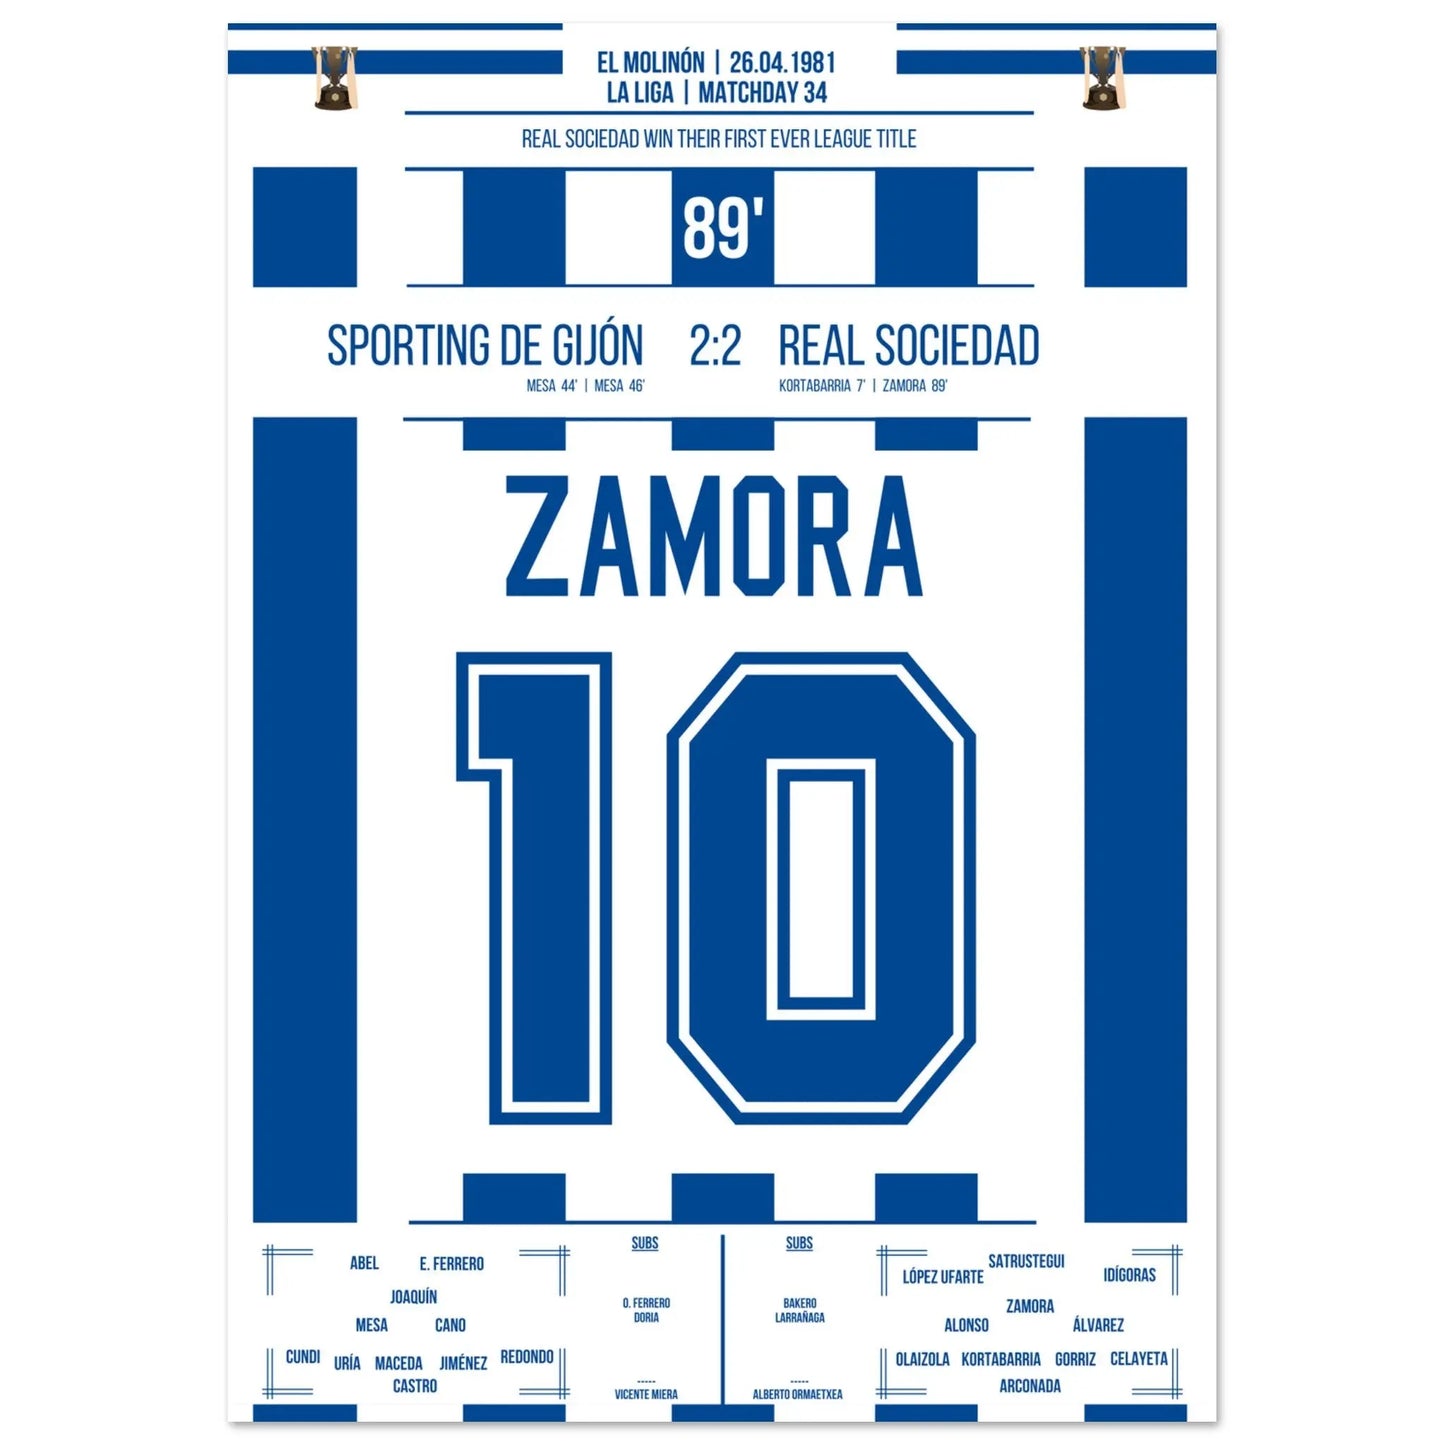 Zamora's goal in San Sebastian's first championship in the club's history